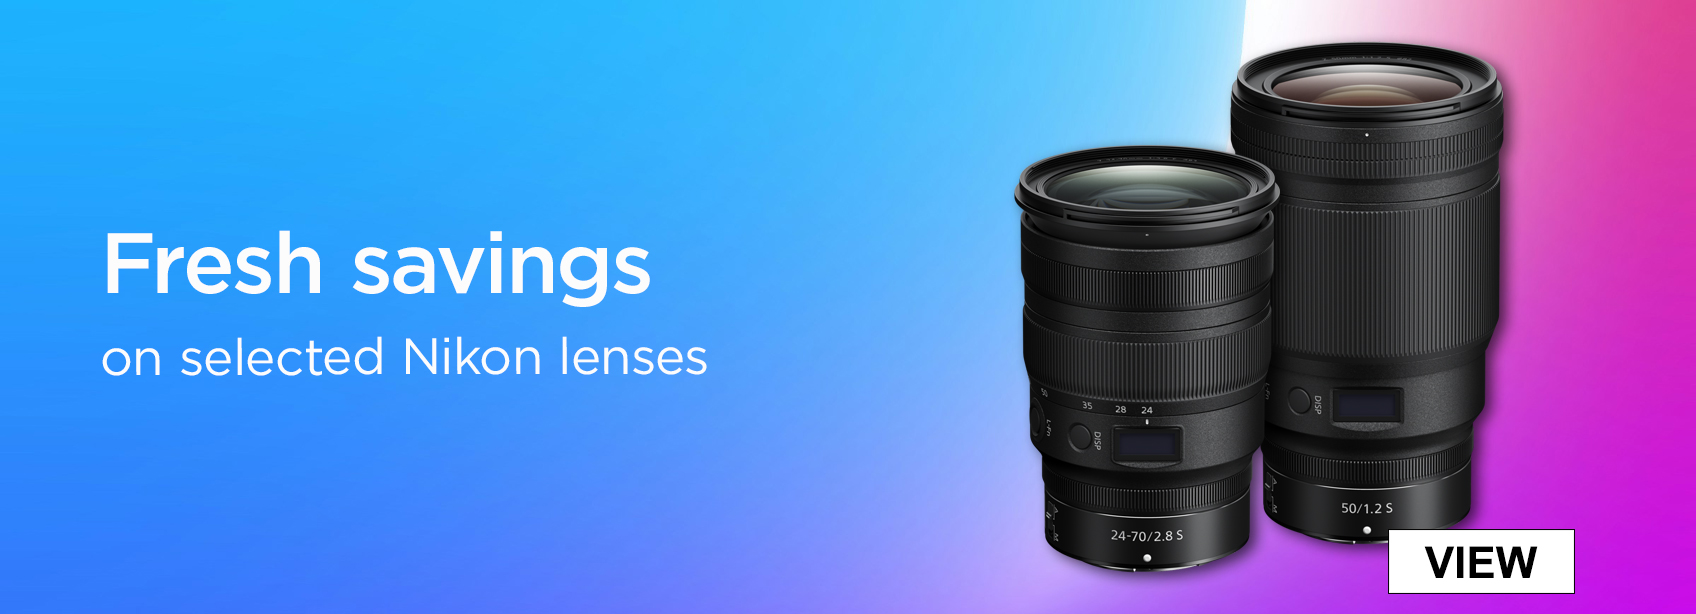 Fresh savings on selected Nikon lenses